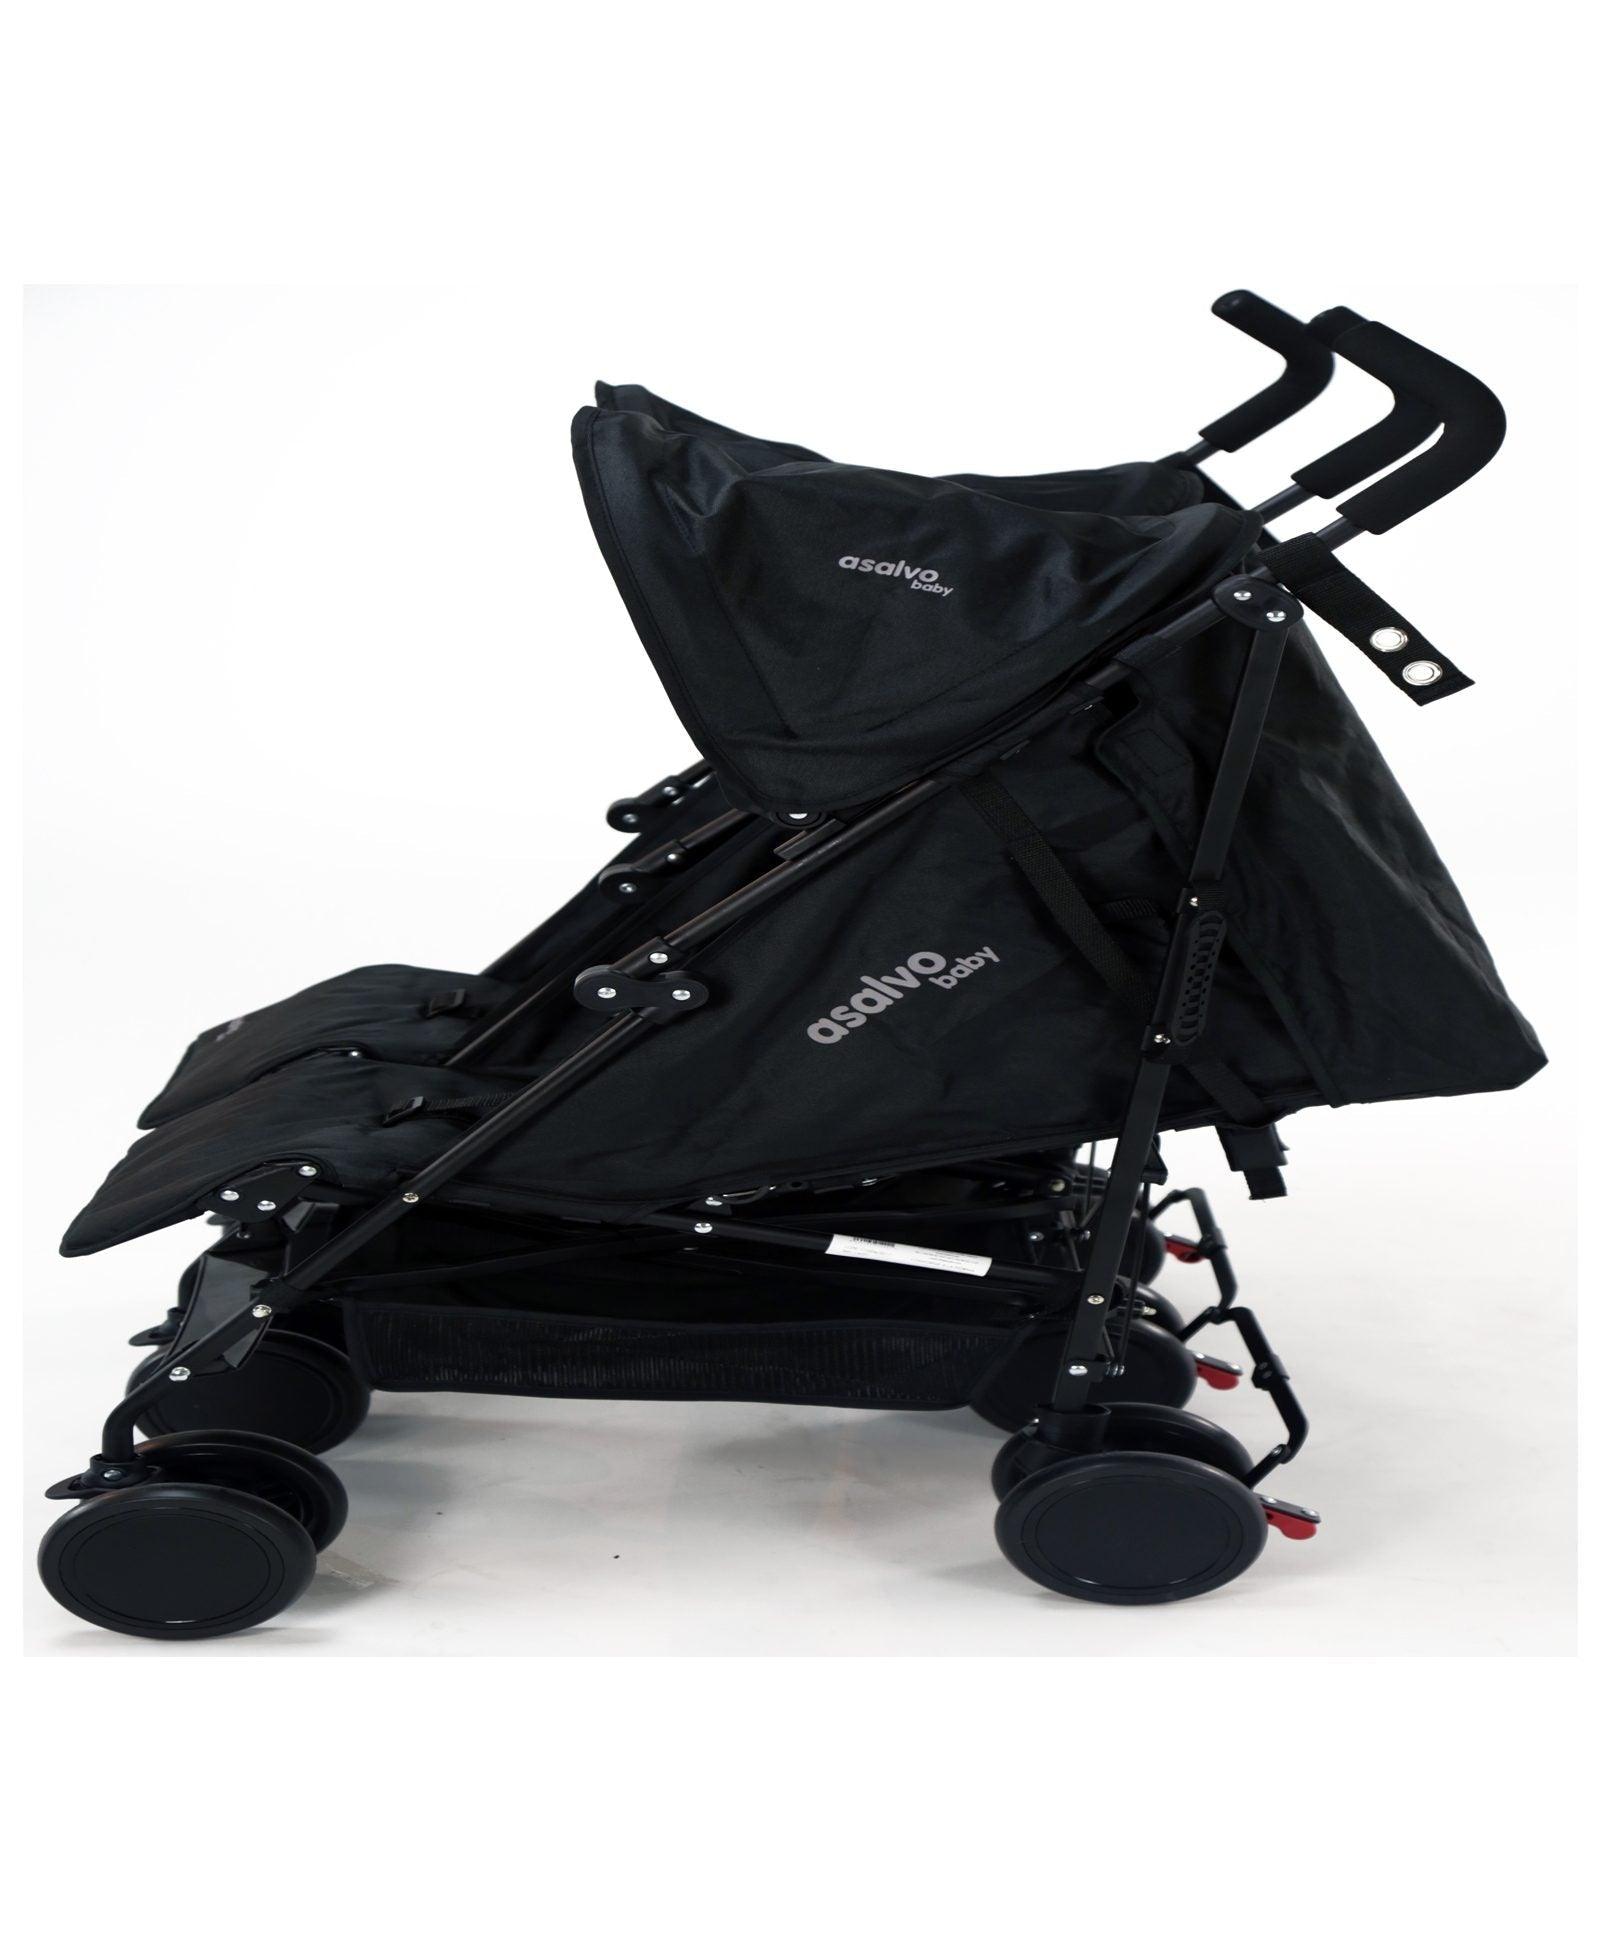 PATOYS | Asalvo Spain 14221 Double Stroller - Black Baby Stroller Asalvo